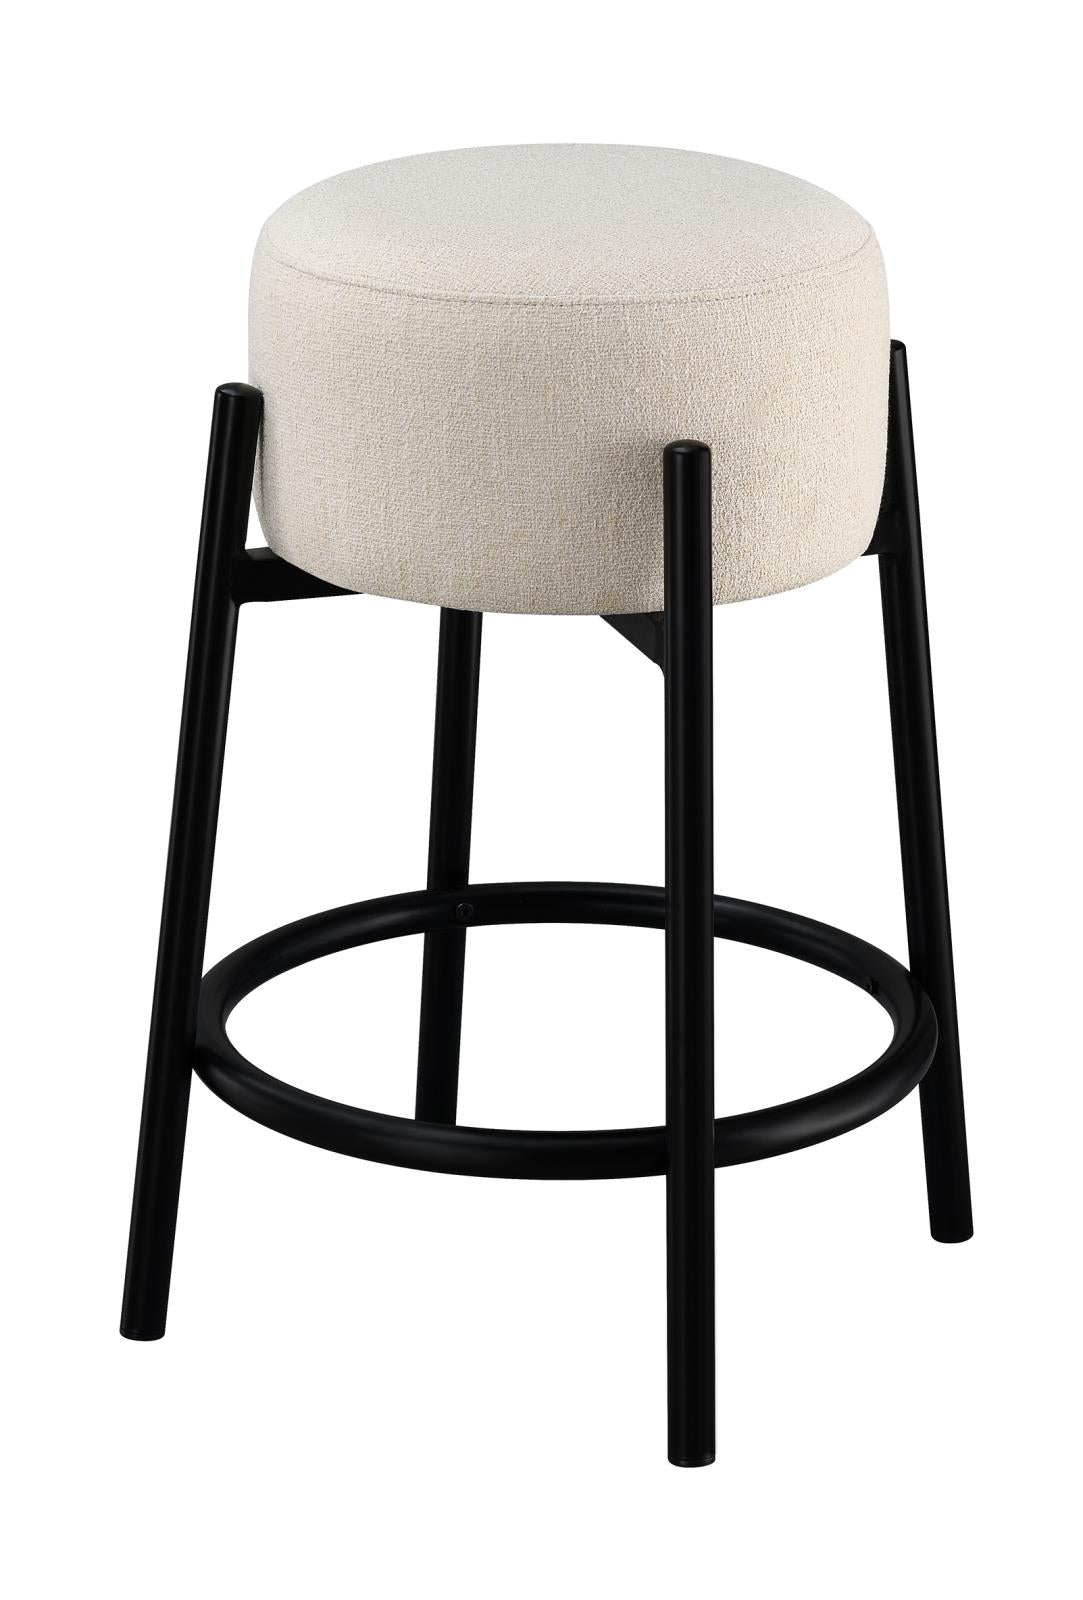 Leonard Upholstered Backless Round Stools White and Black (Set of 2)  Half Price Furniture